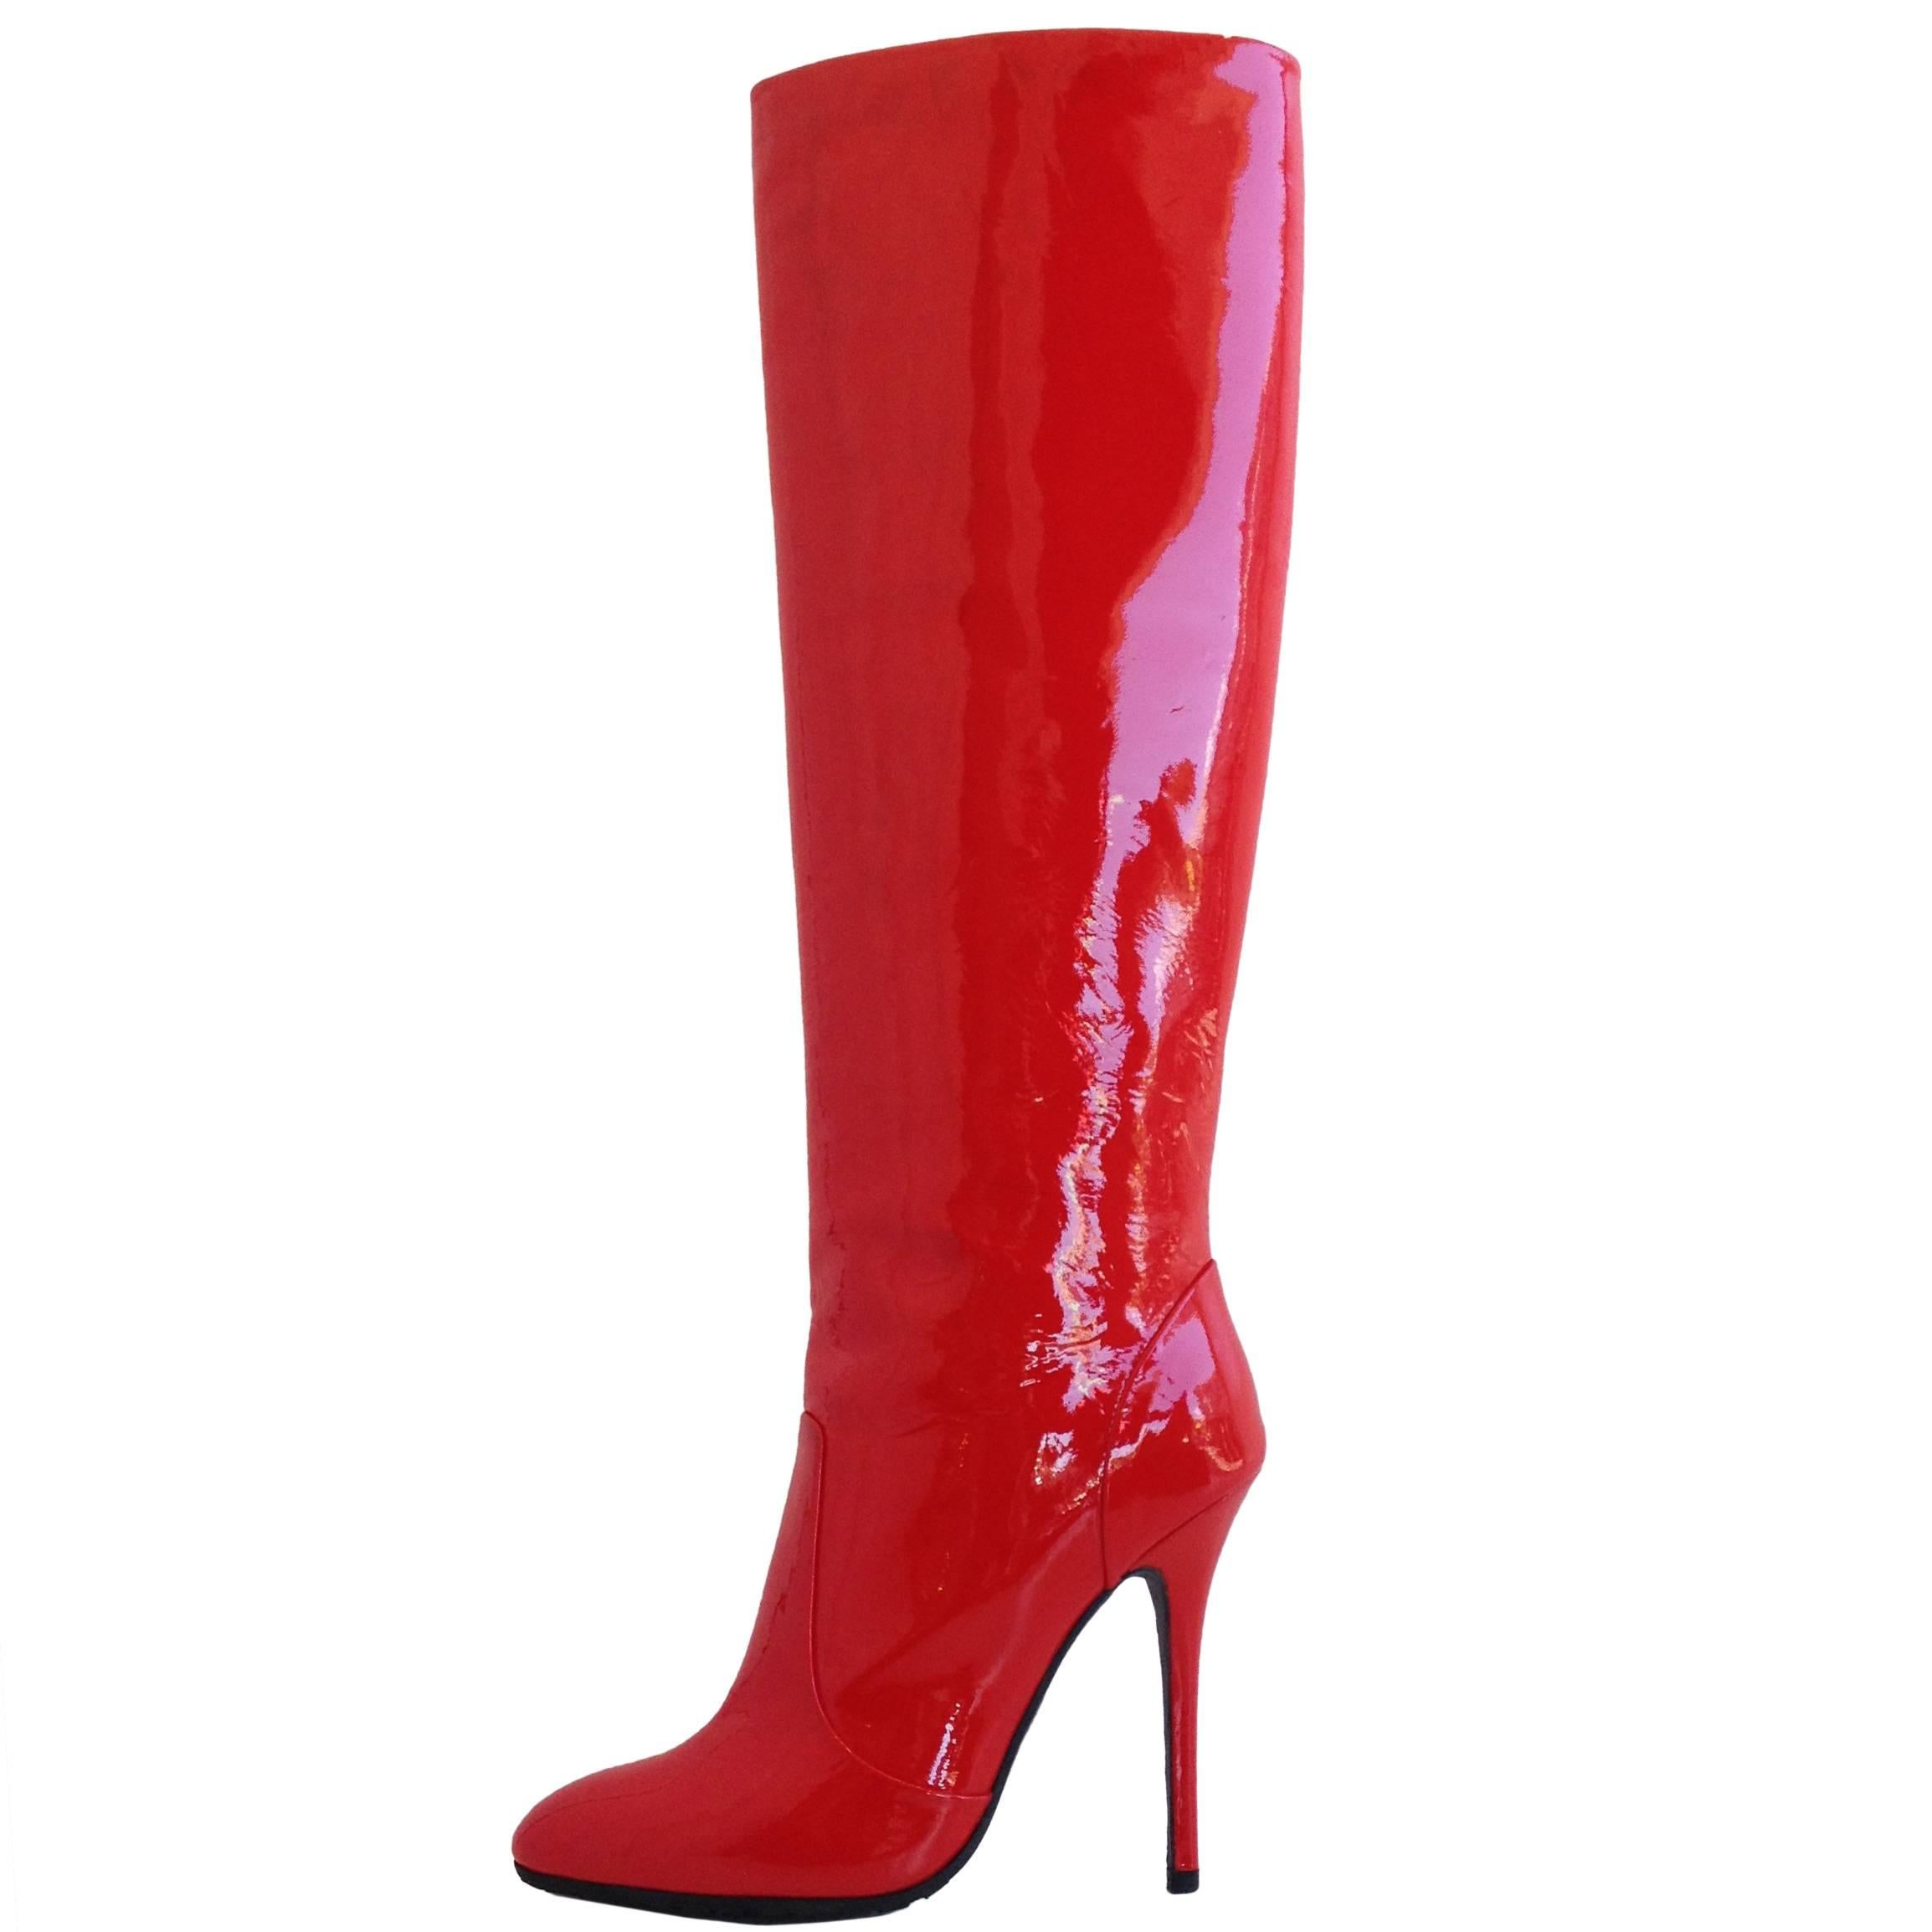 Giuseppe Zanotti Red Patent Knee-High Boots Size 37 (6.5)